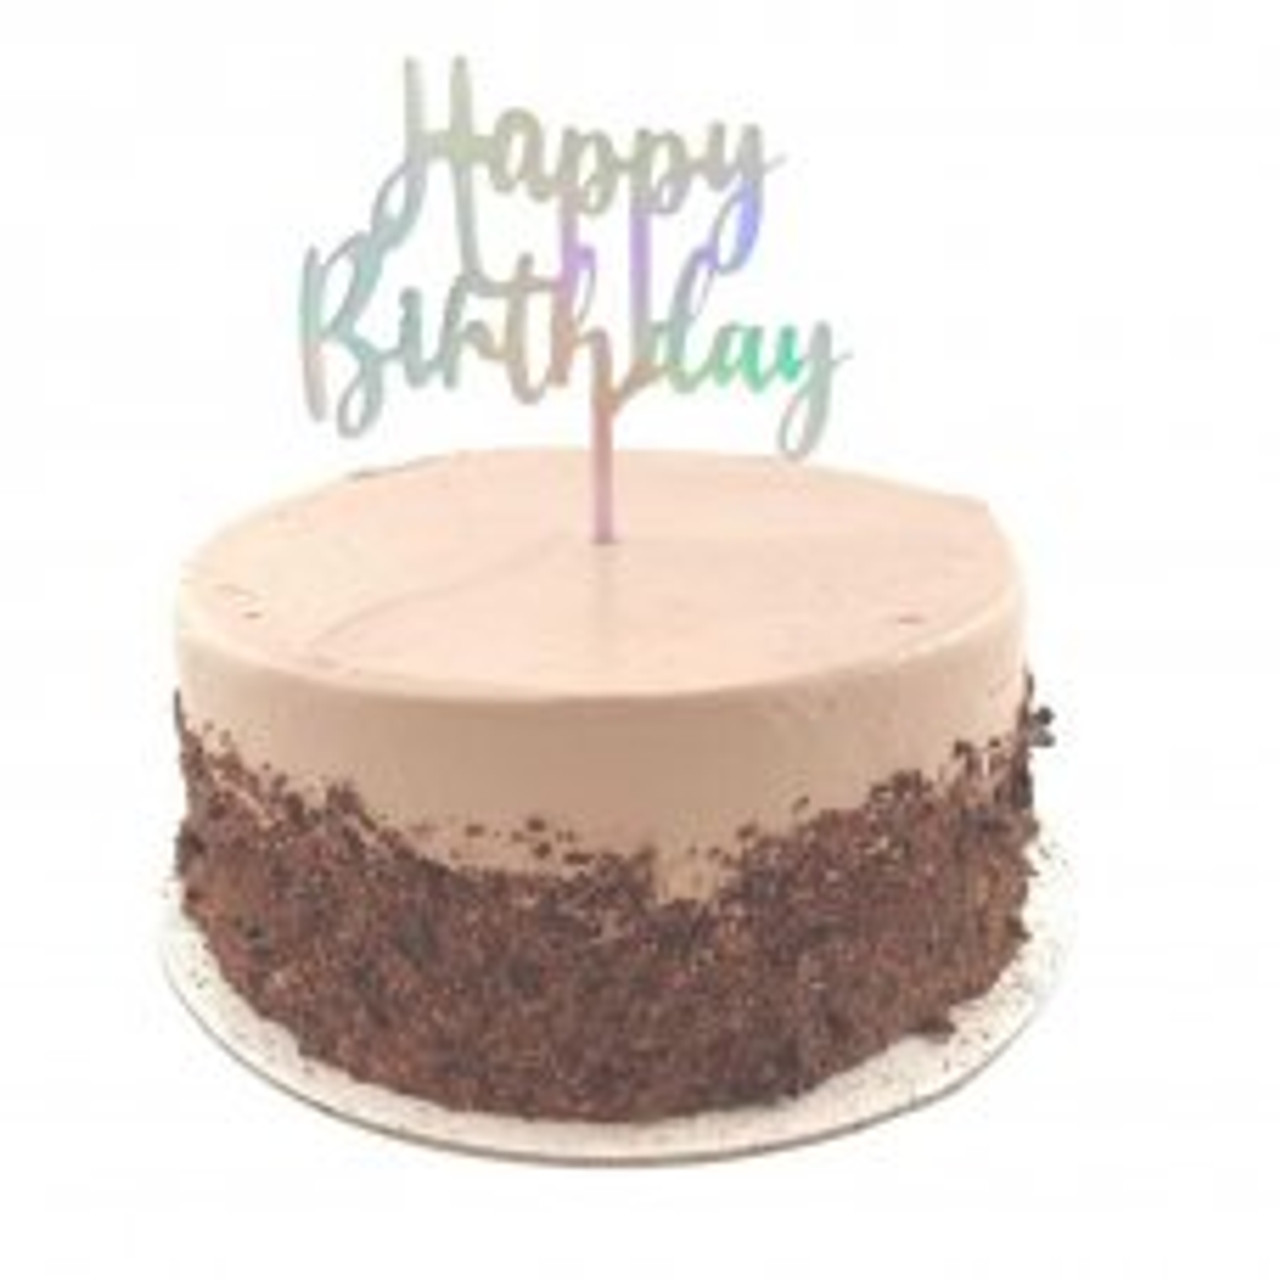 CAKE TOPPER ACRYLIC HAPPY BIRTHDAY IRIDESCENT